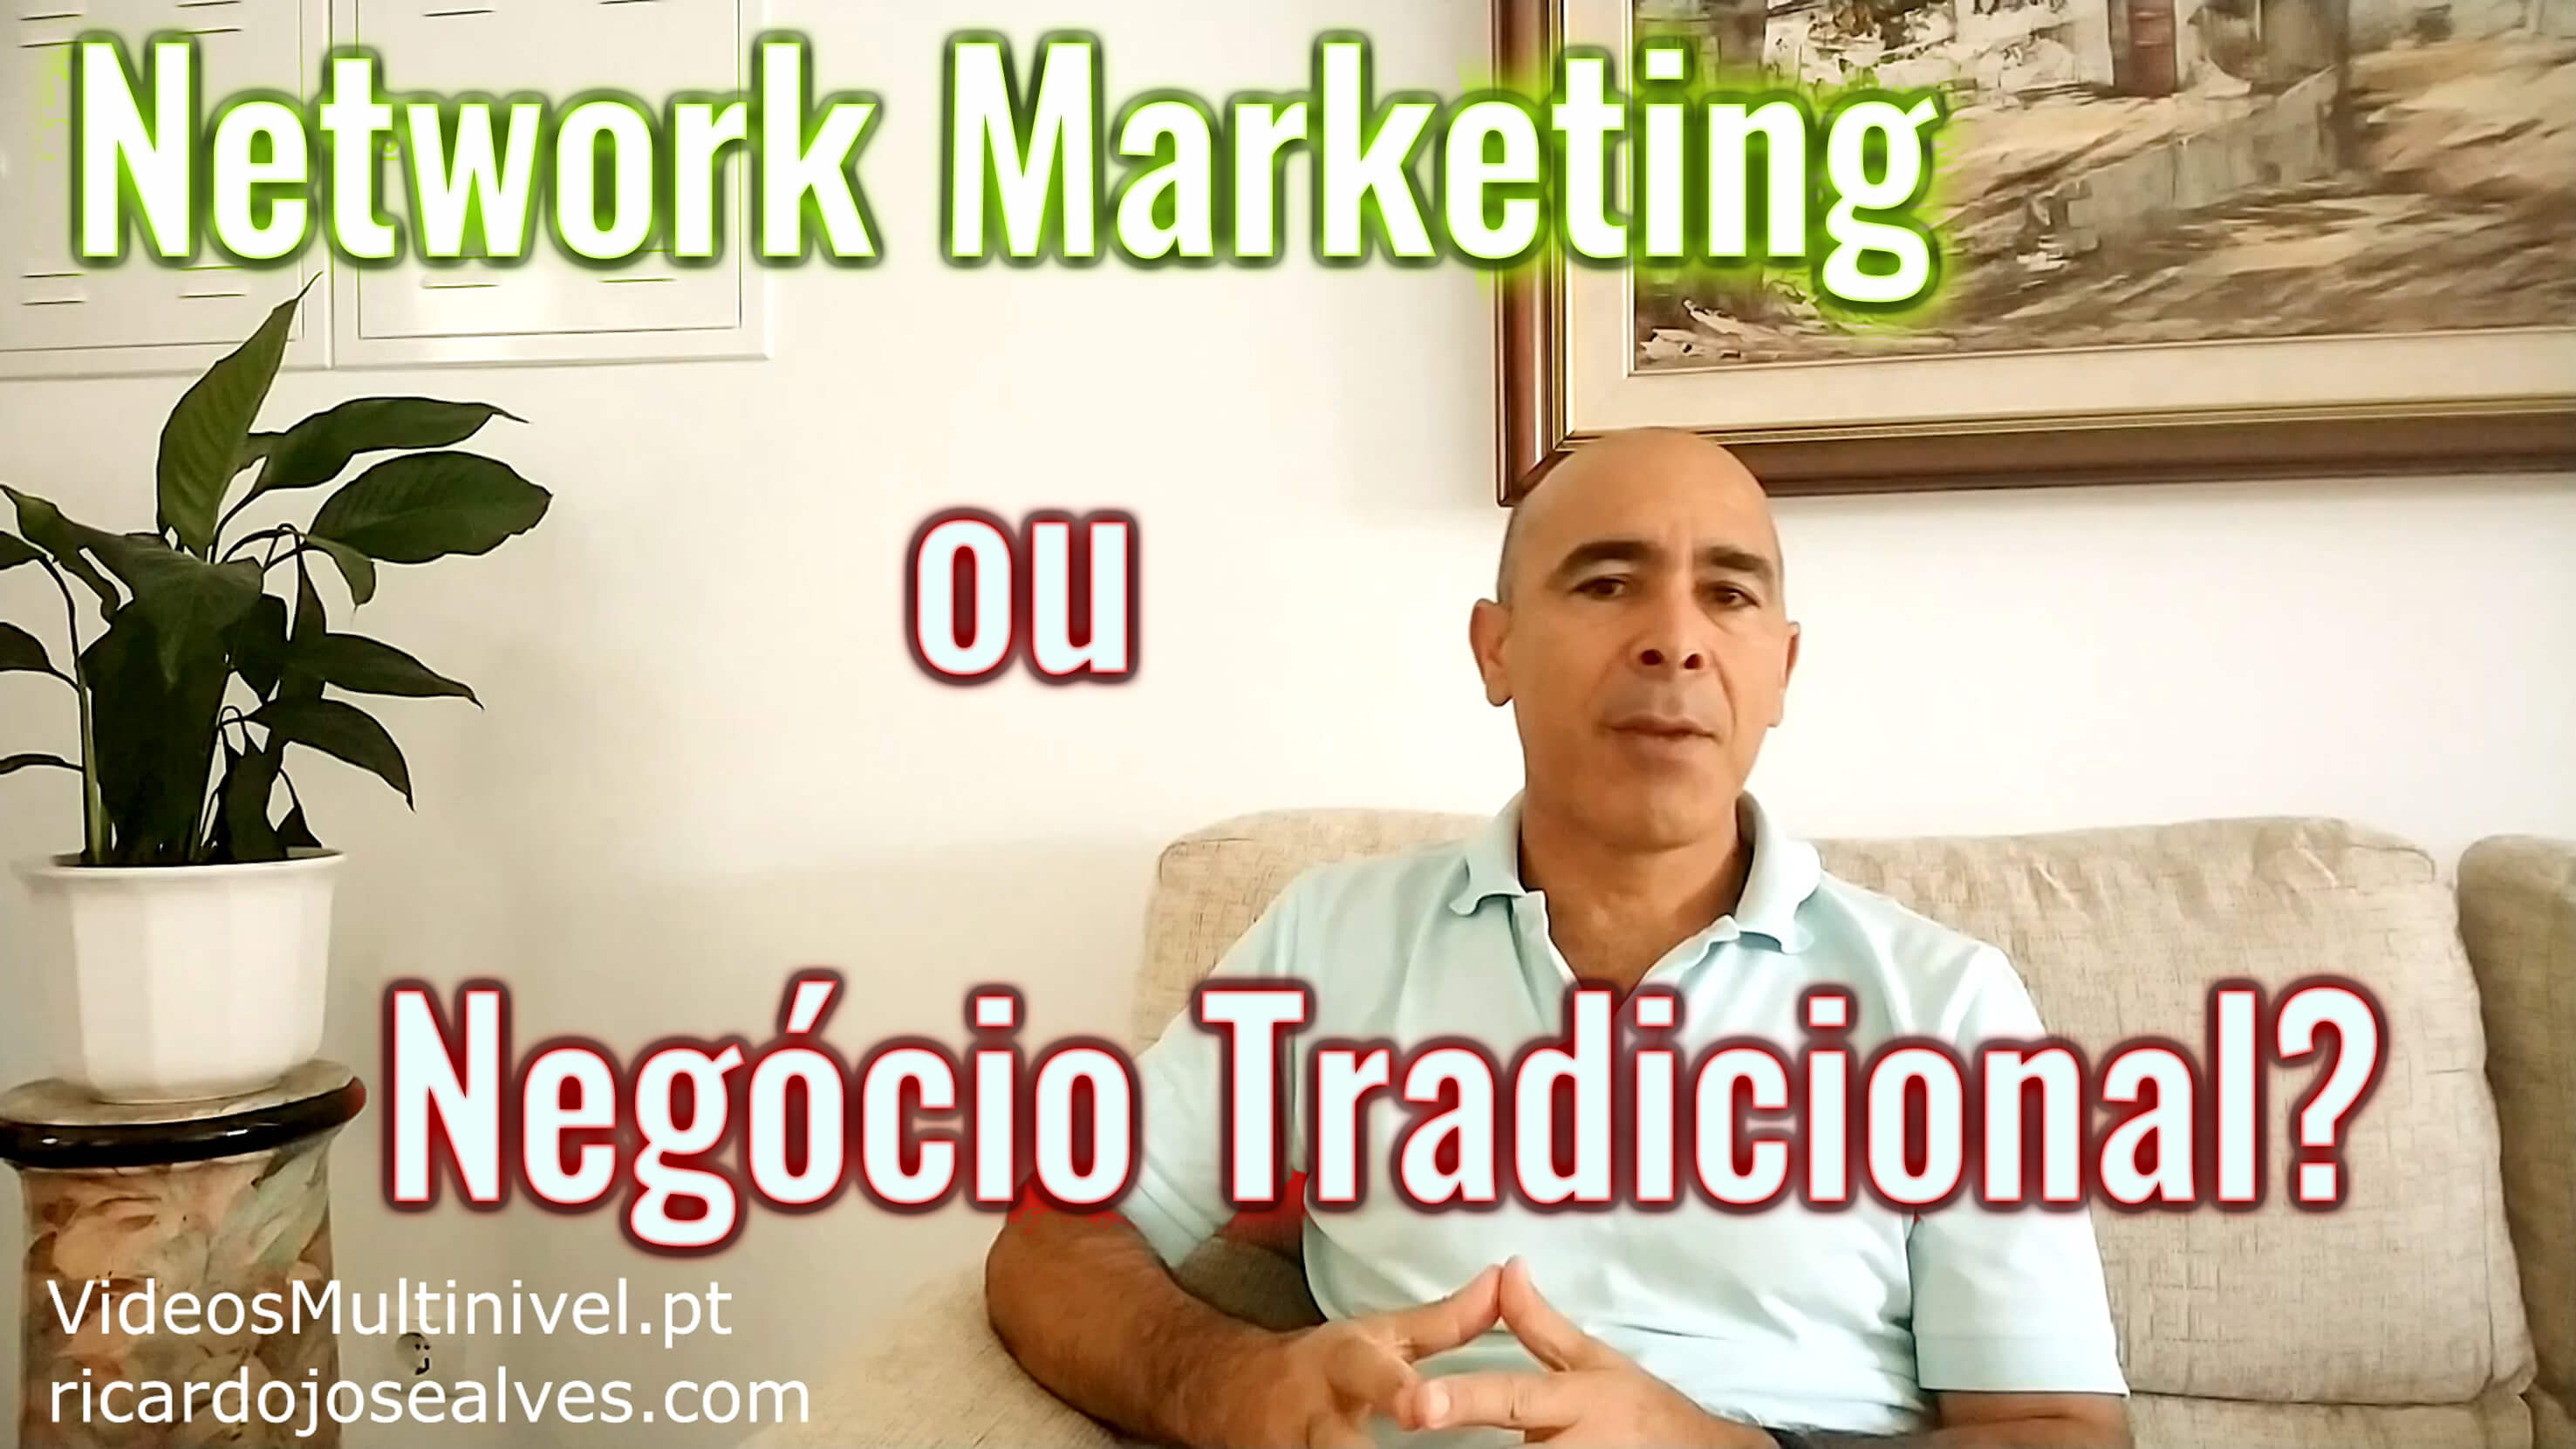 Network Marketing versus Negócio Tradicional